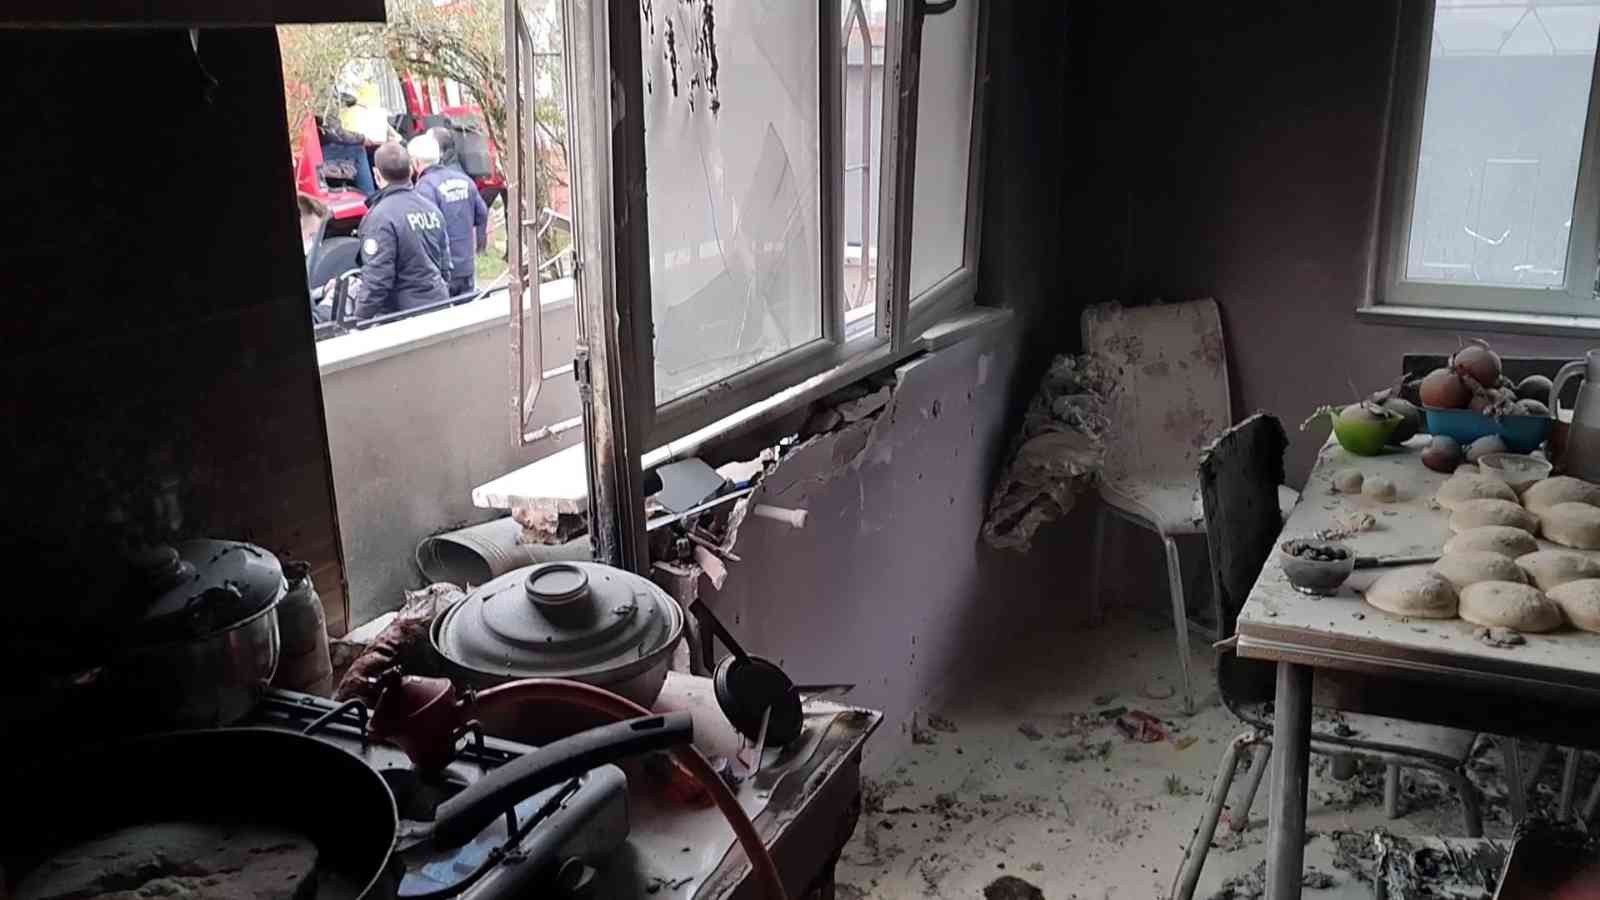 Mutfak tüpü patladı, ev alev alev yandı: 4 yaralı
